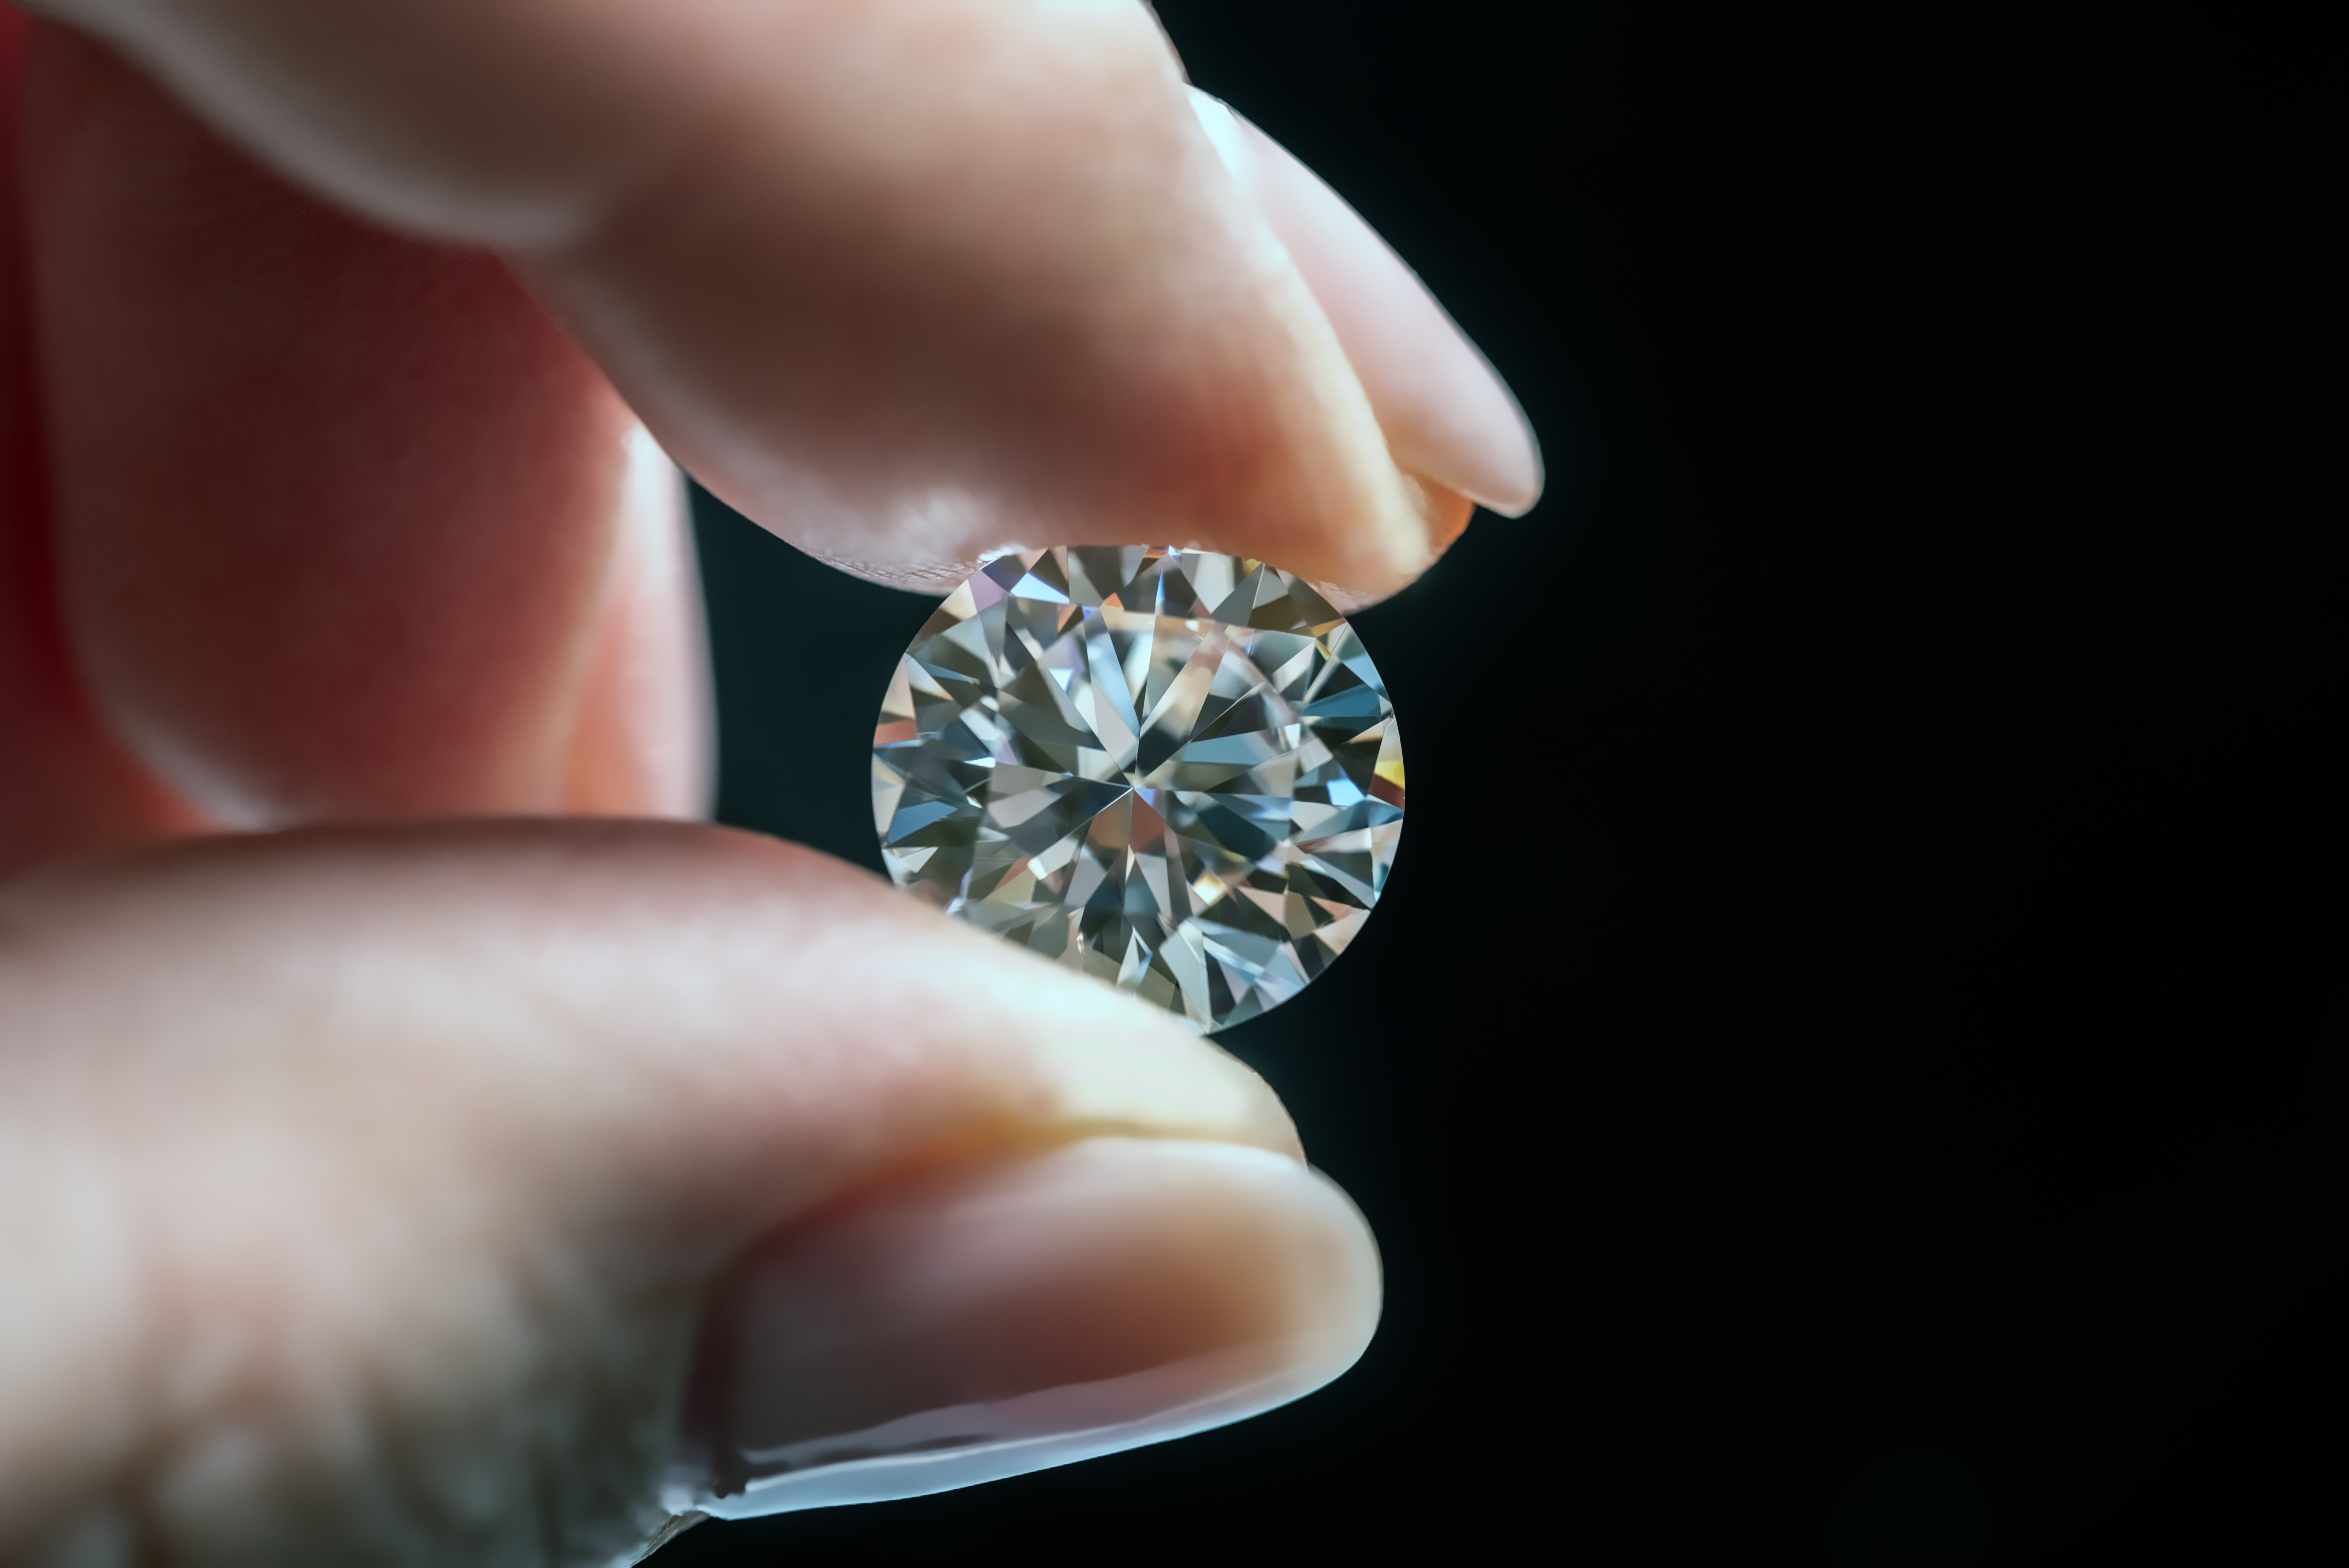 Female Hand Holding Diamond | Source: Shutterstock.com